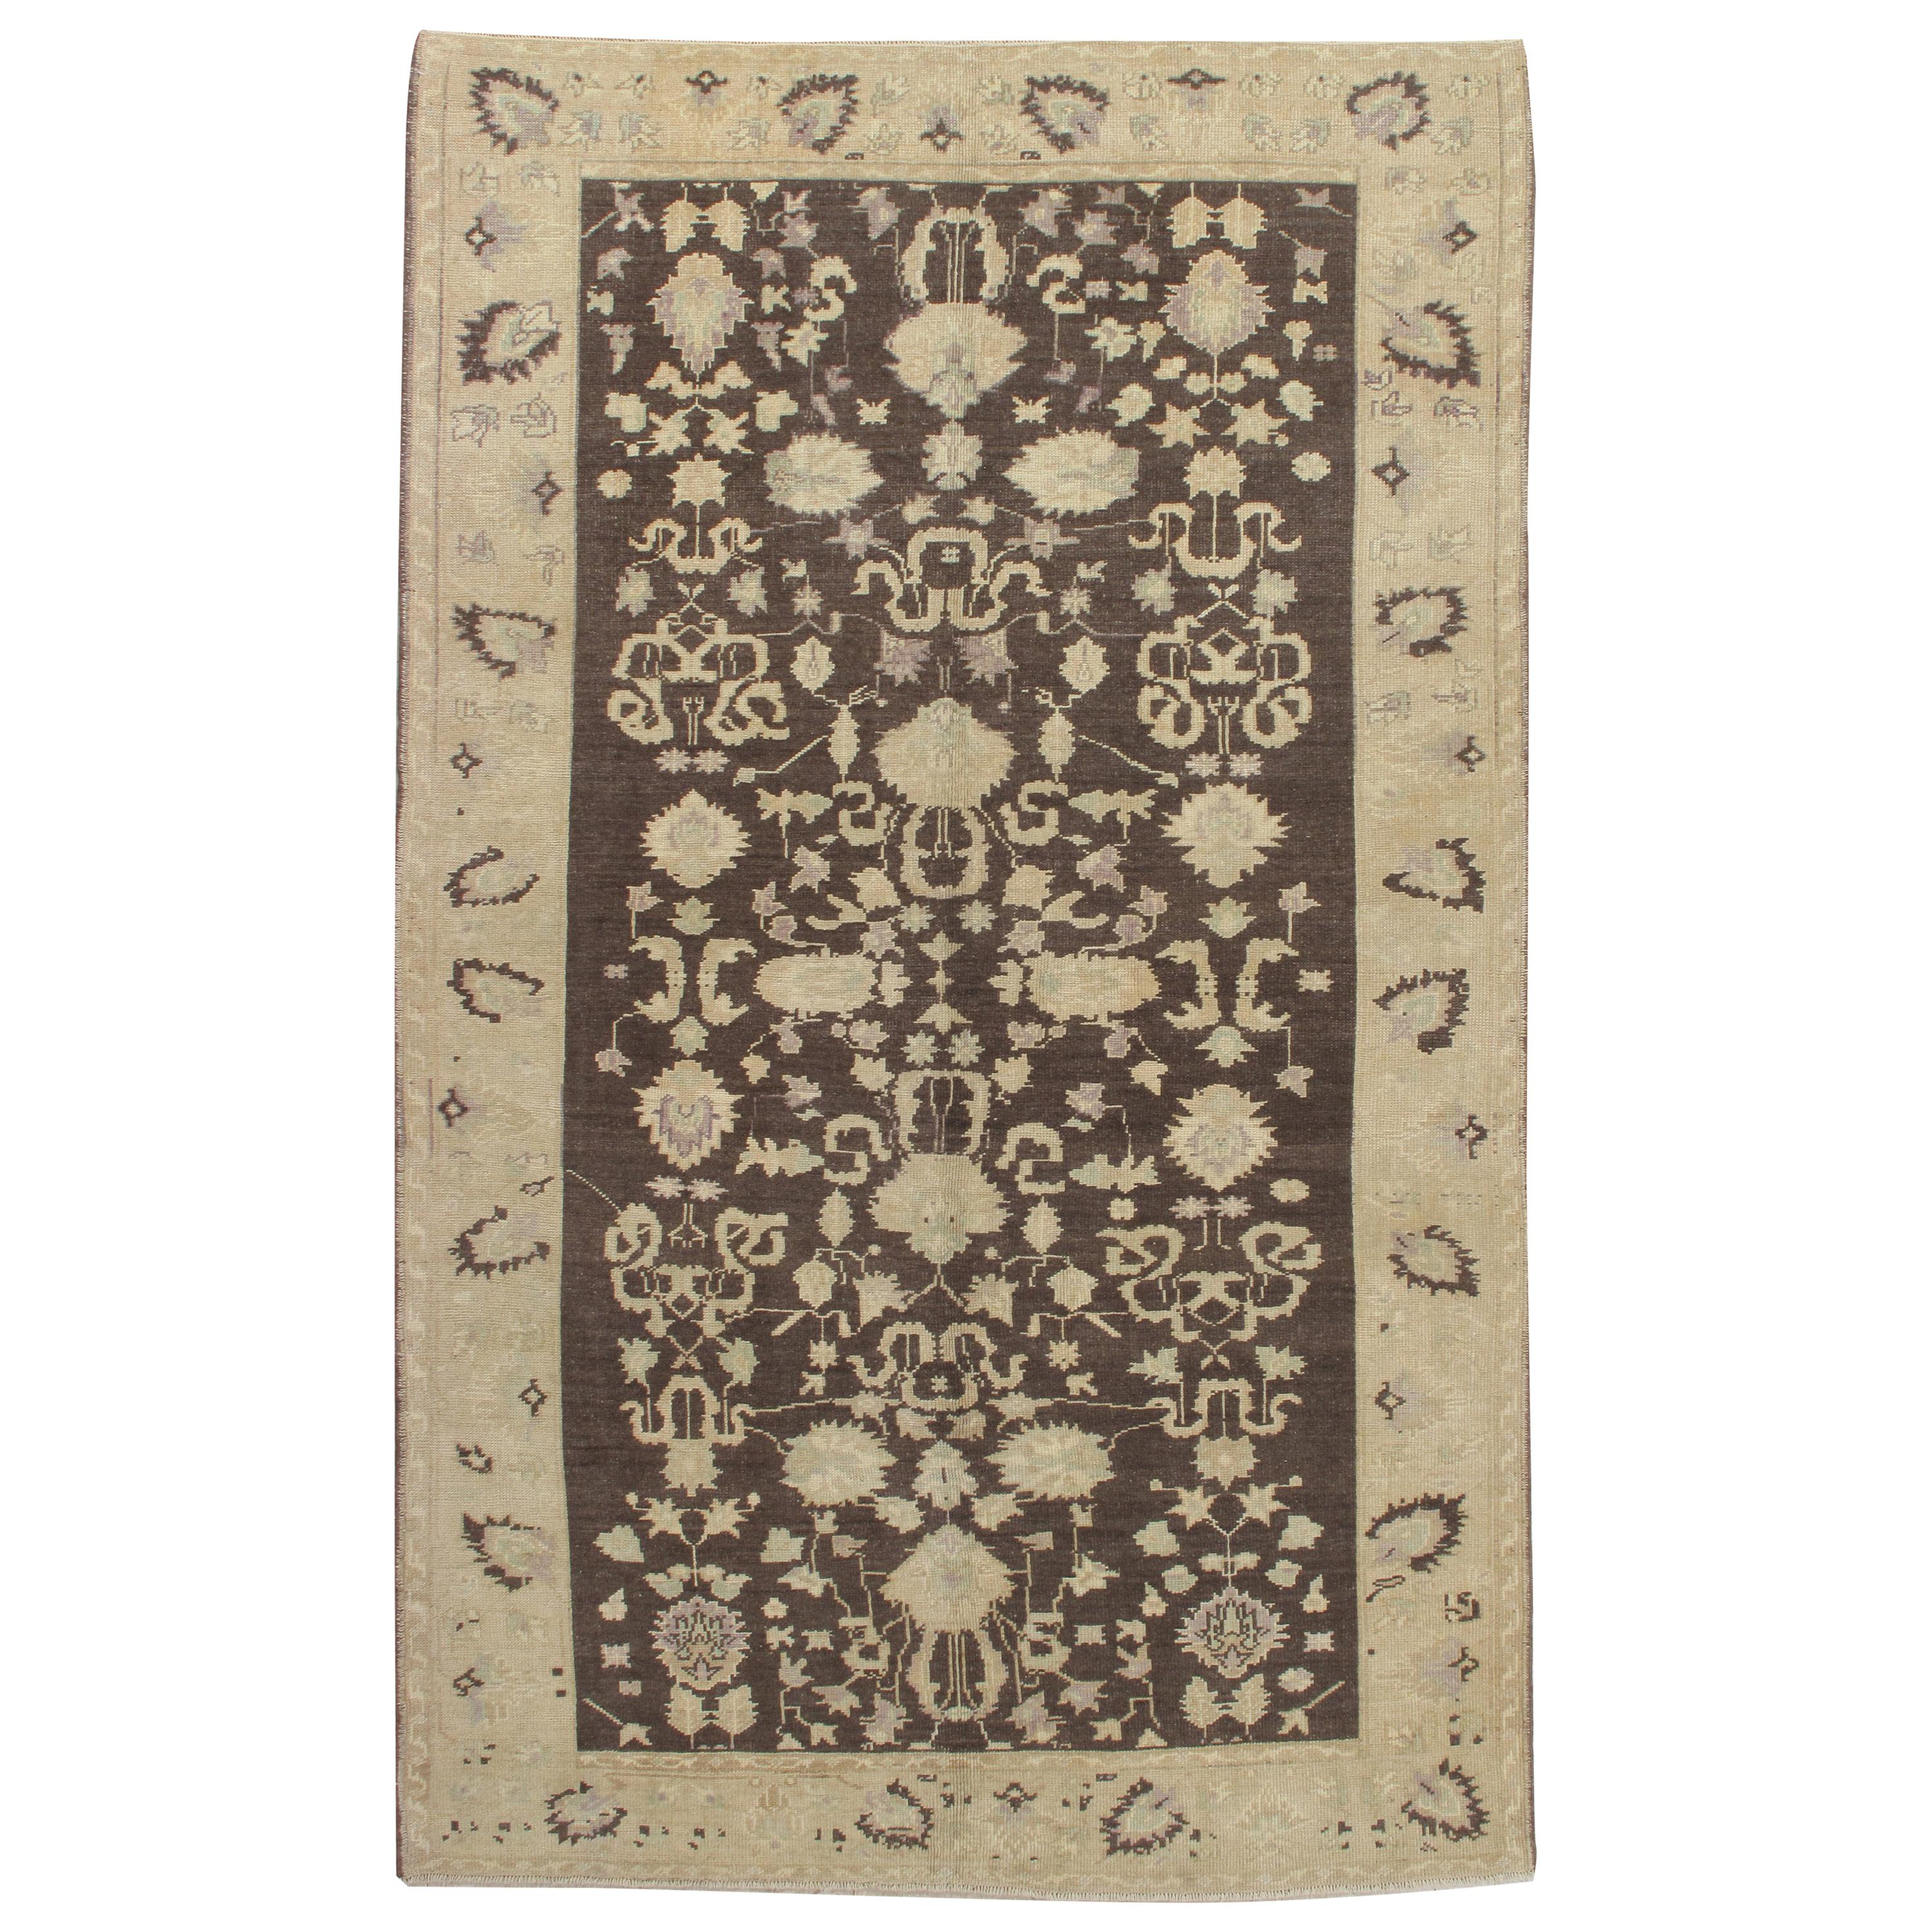 Antique Oushak Carpet, Handmade Turkish Oriental Rug, Beige, Taupe, Charcoal